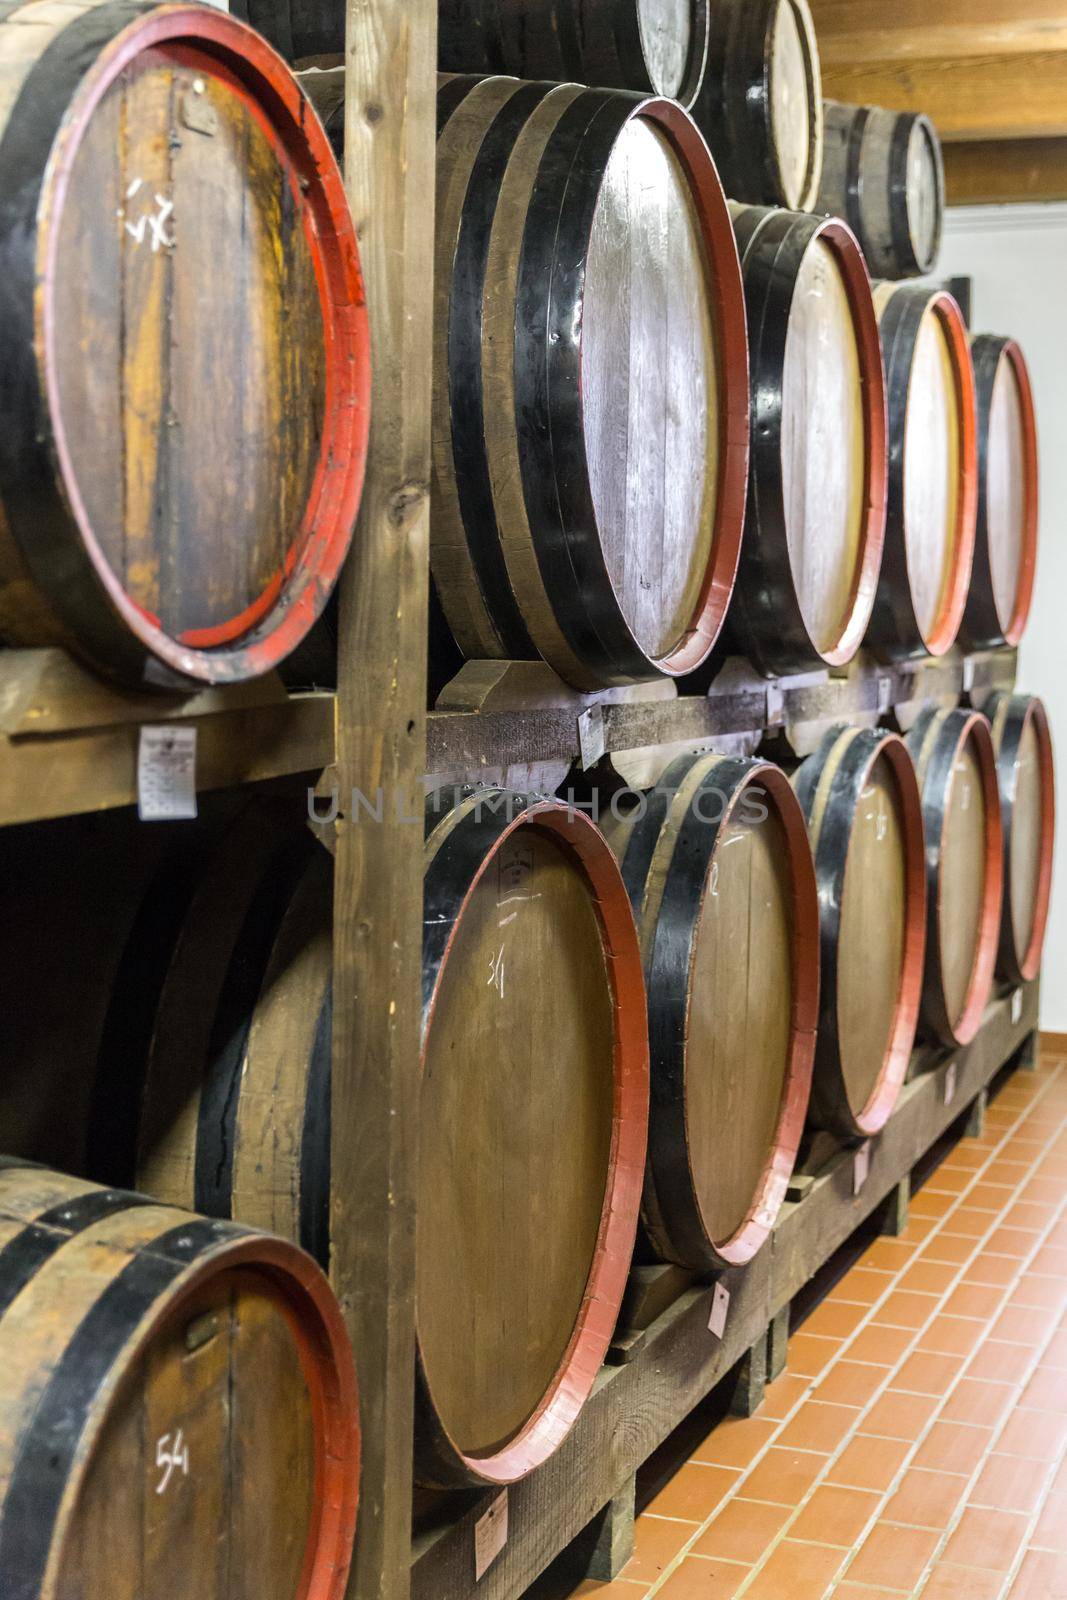 balsamic vinegar barrels storing and aging